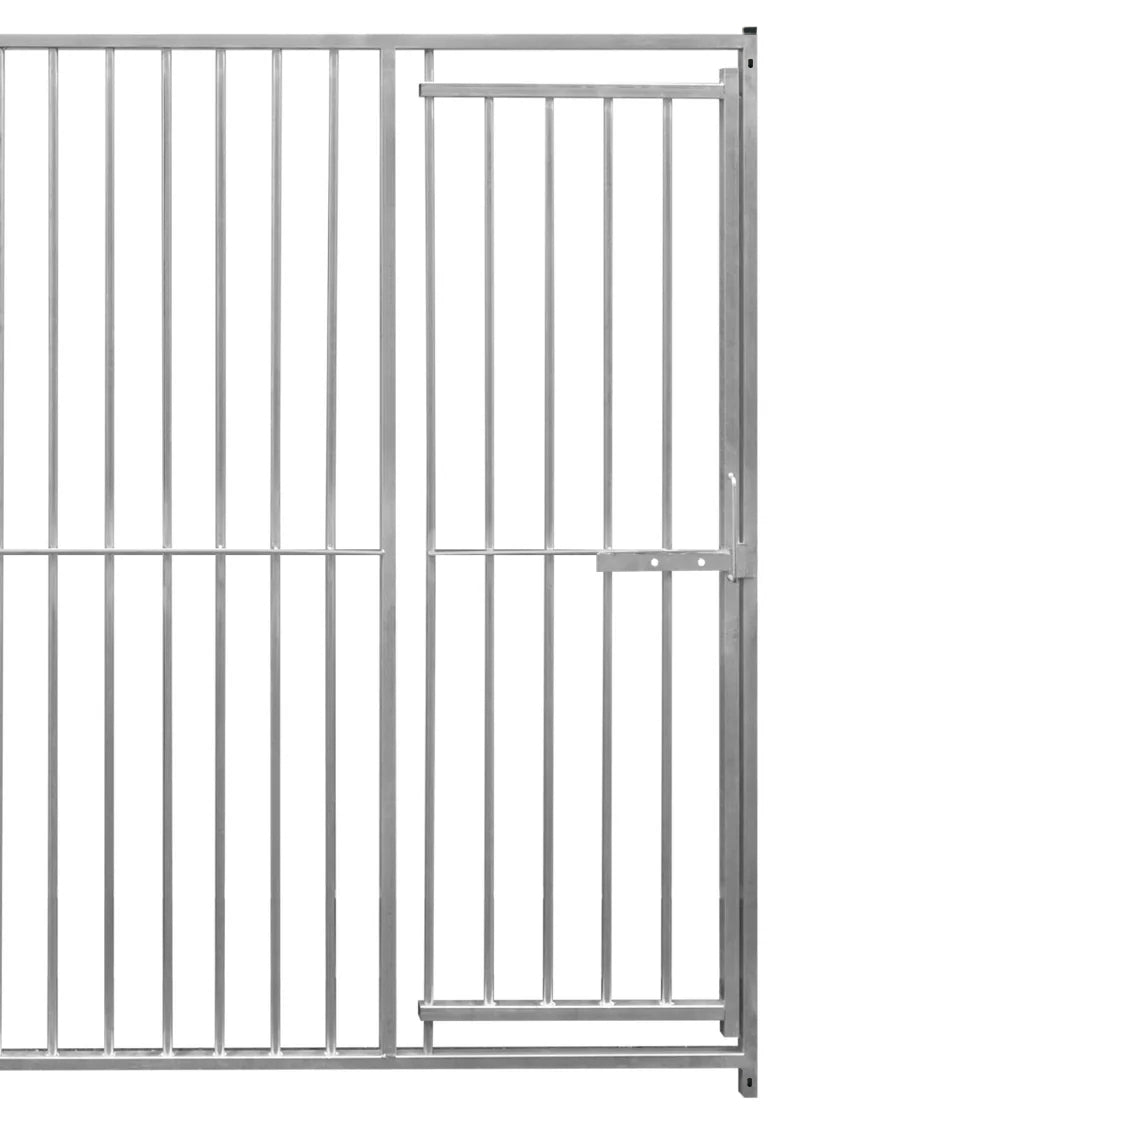 1m Dog Run Panel With Door – 5cm Bar Spacing